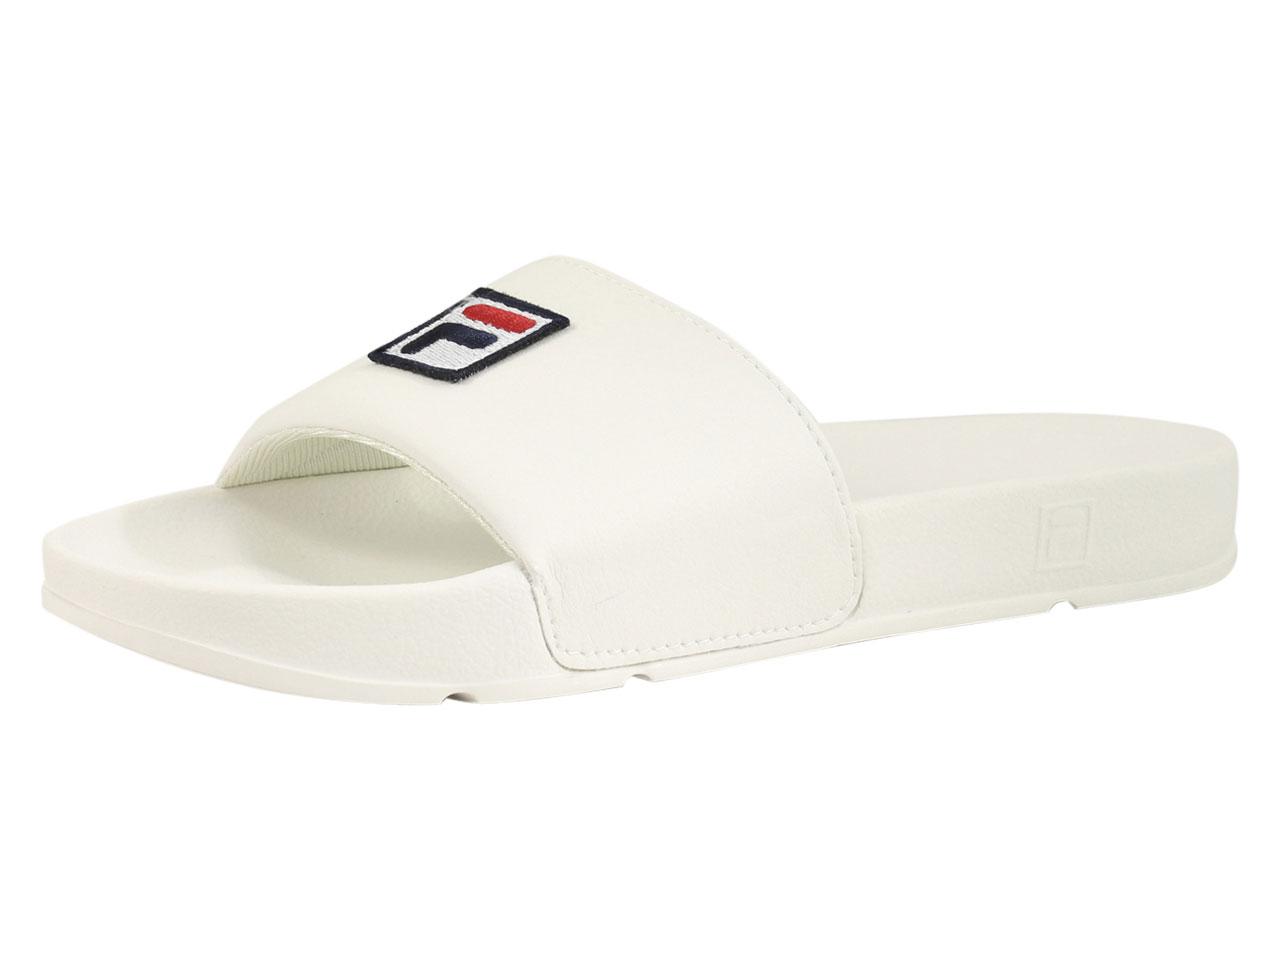 Fila Men's Drifter F Box Slides Sandals Shoes - Gardenia/Fila Navy/Fila Red - 7 D(M) US